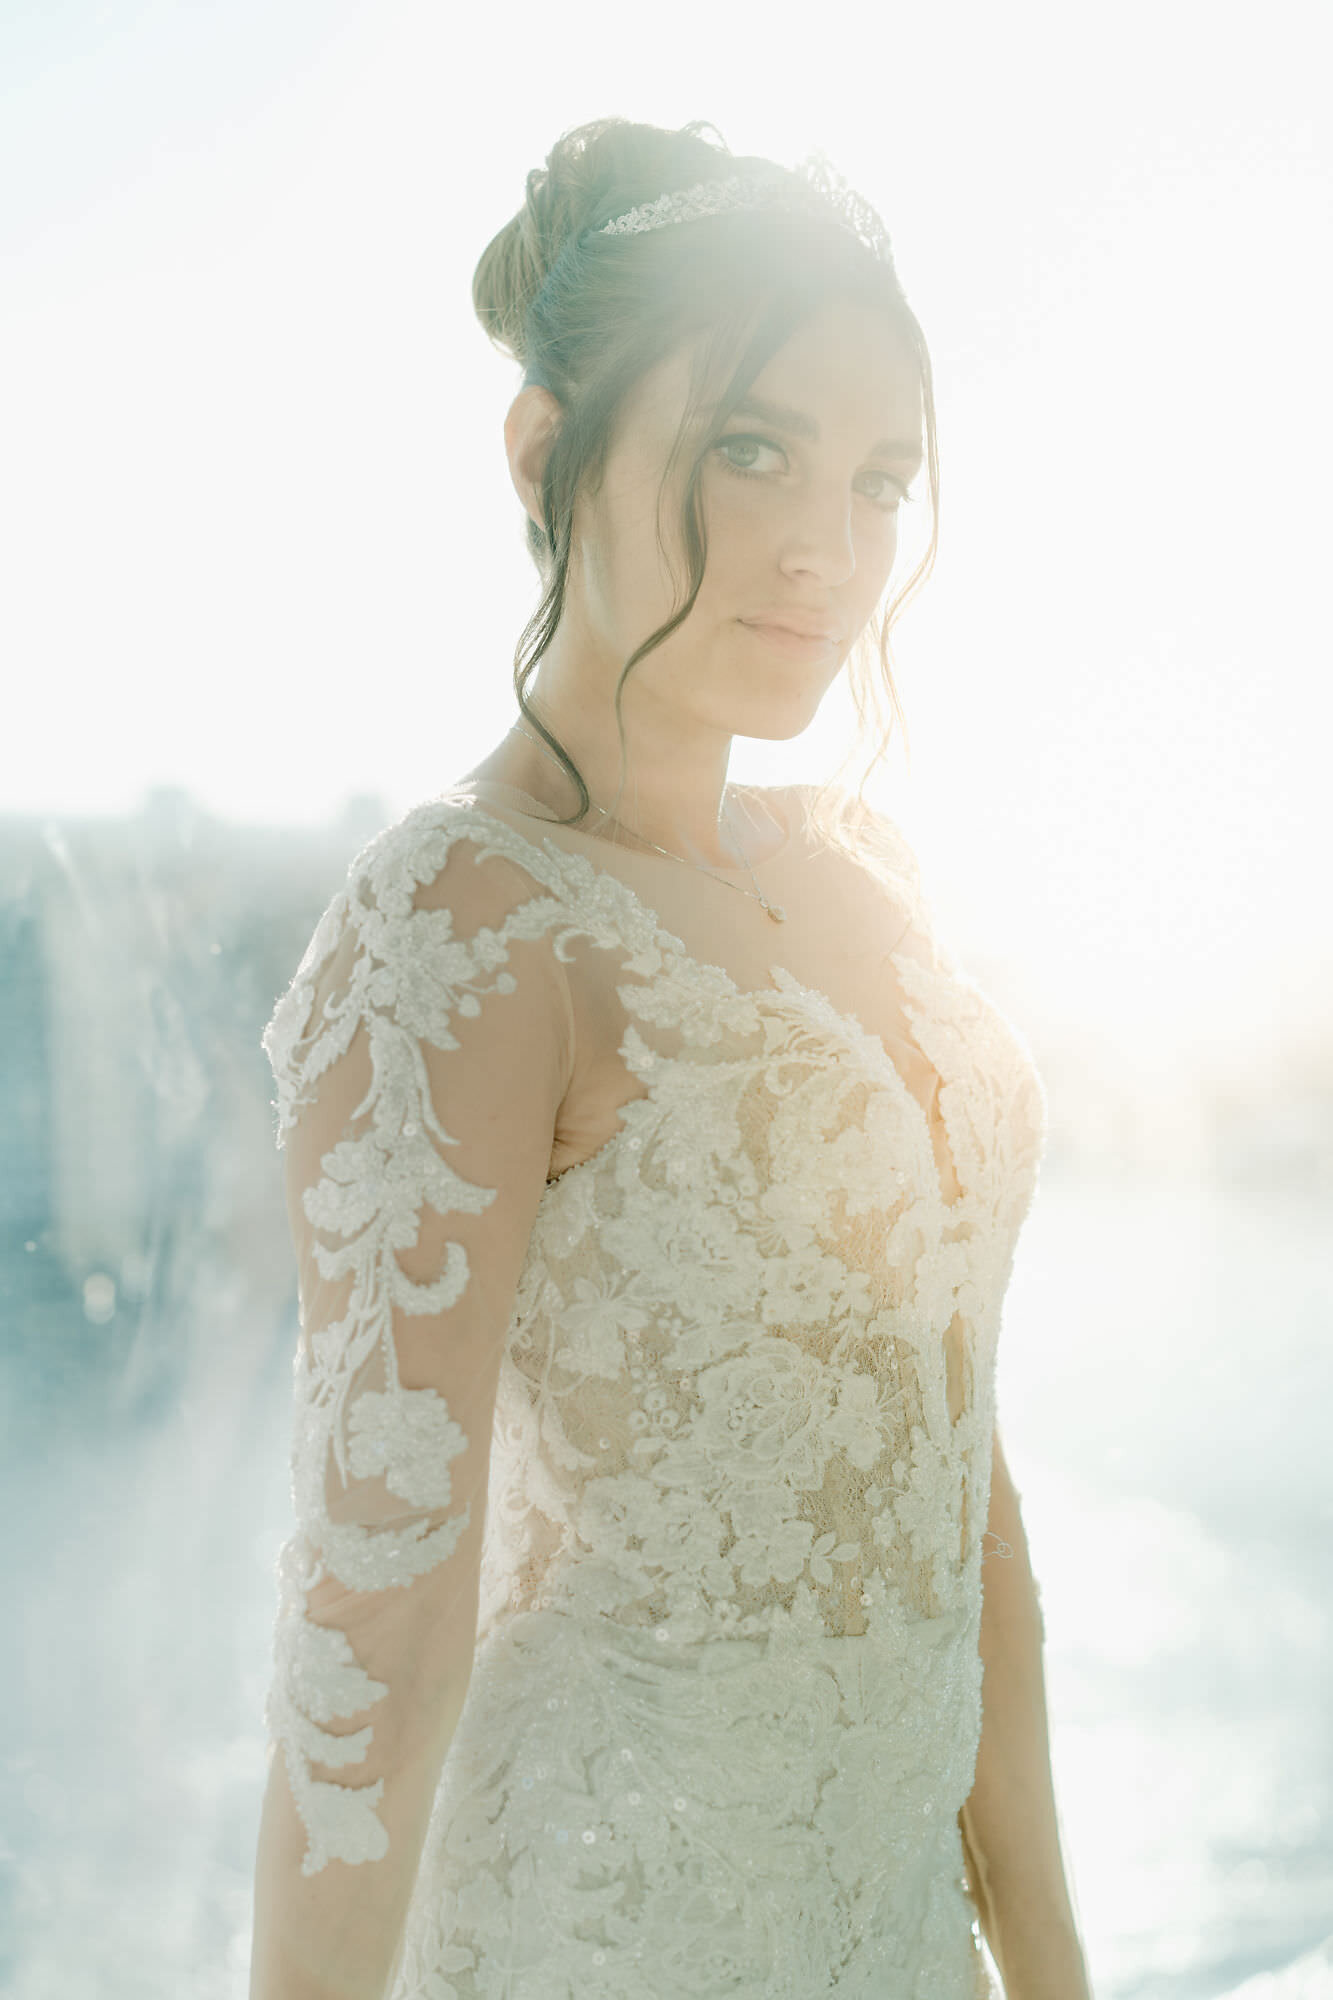 best wedding photographers amsterdam at adam toren portrait of bride in window light